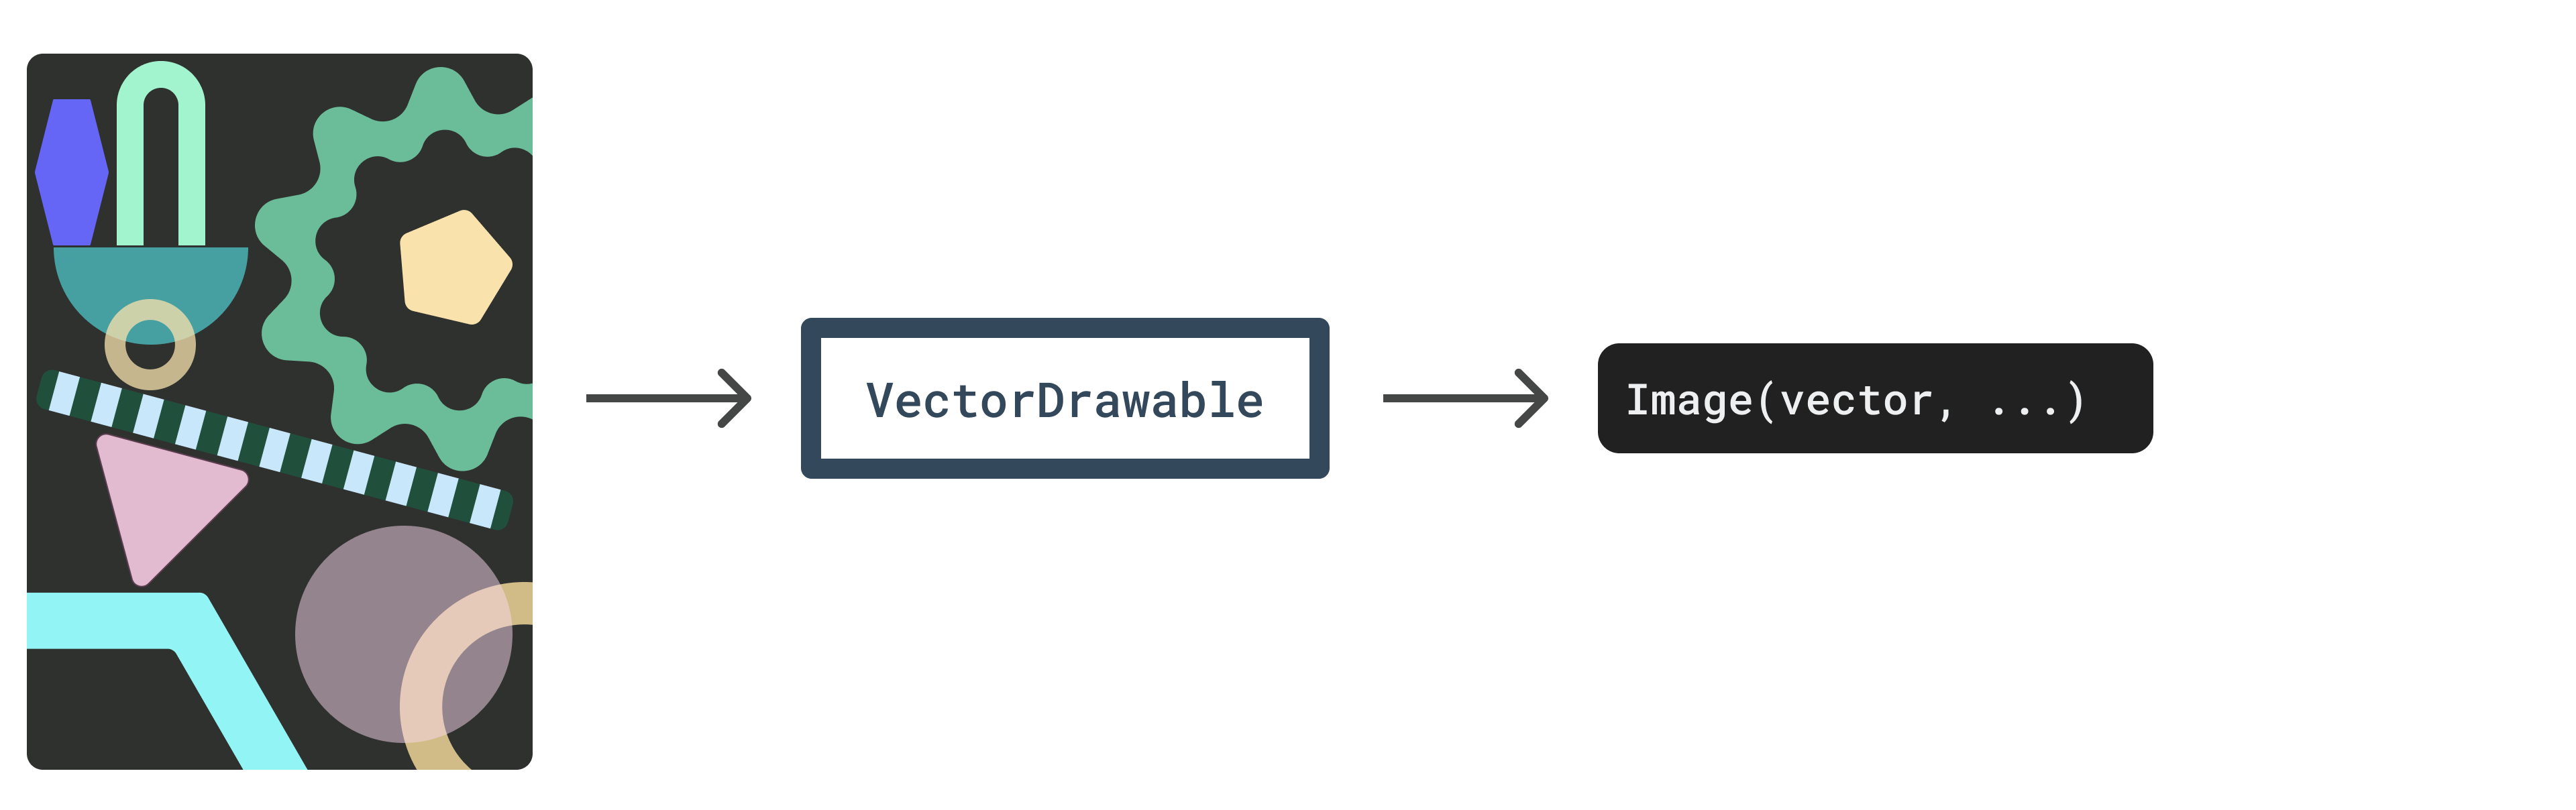 Şema - VectorDrawable to Image&#39;a vektör katmanları